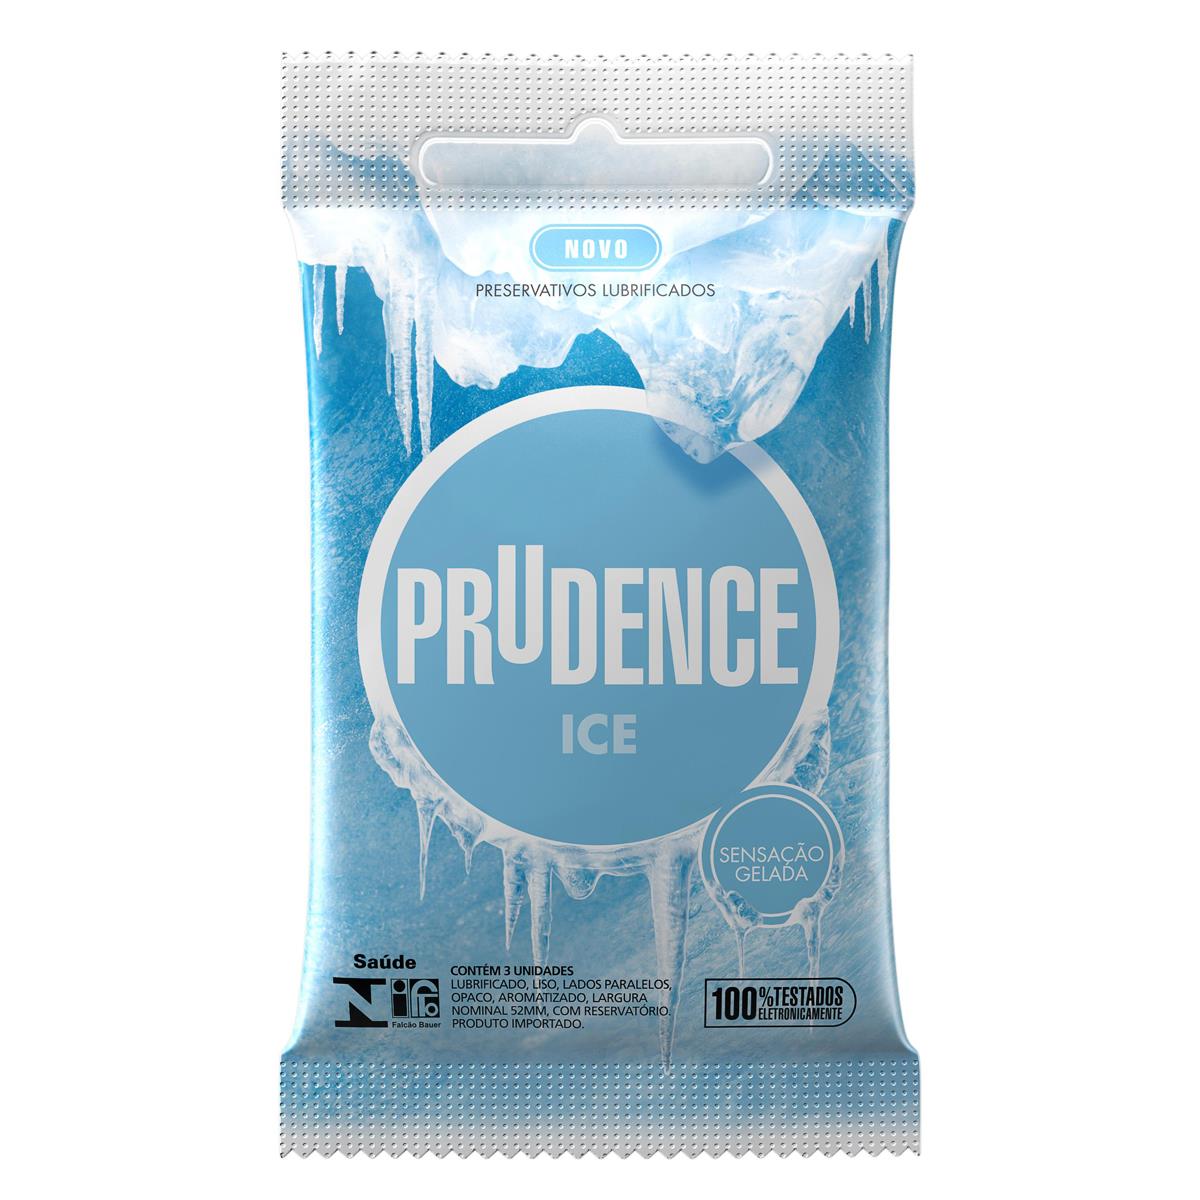 Preservativos Ice Prudence